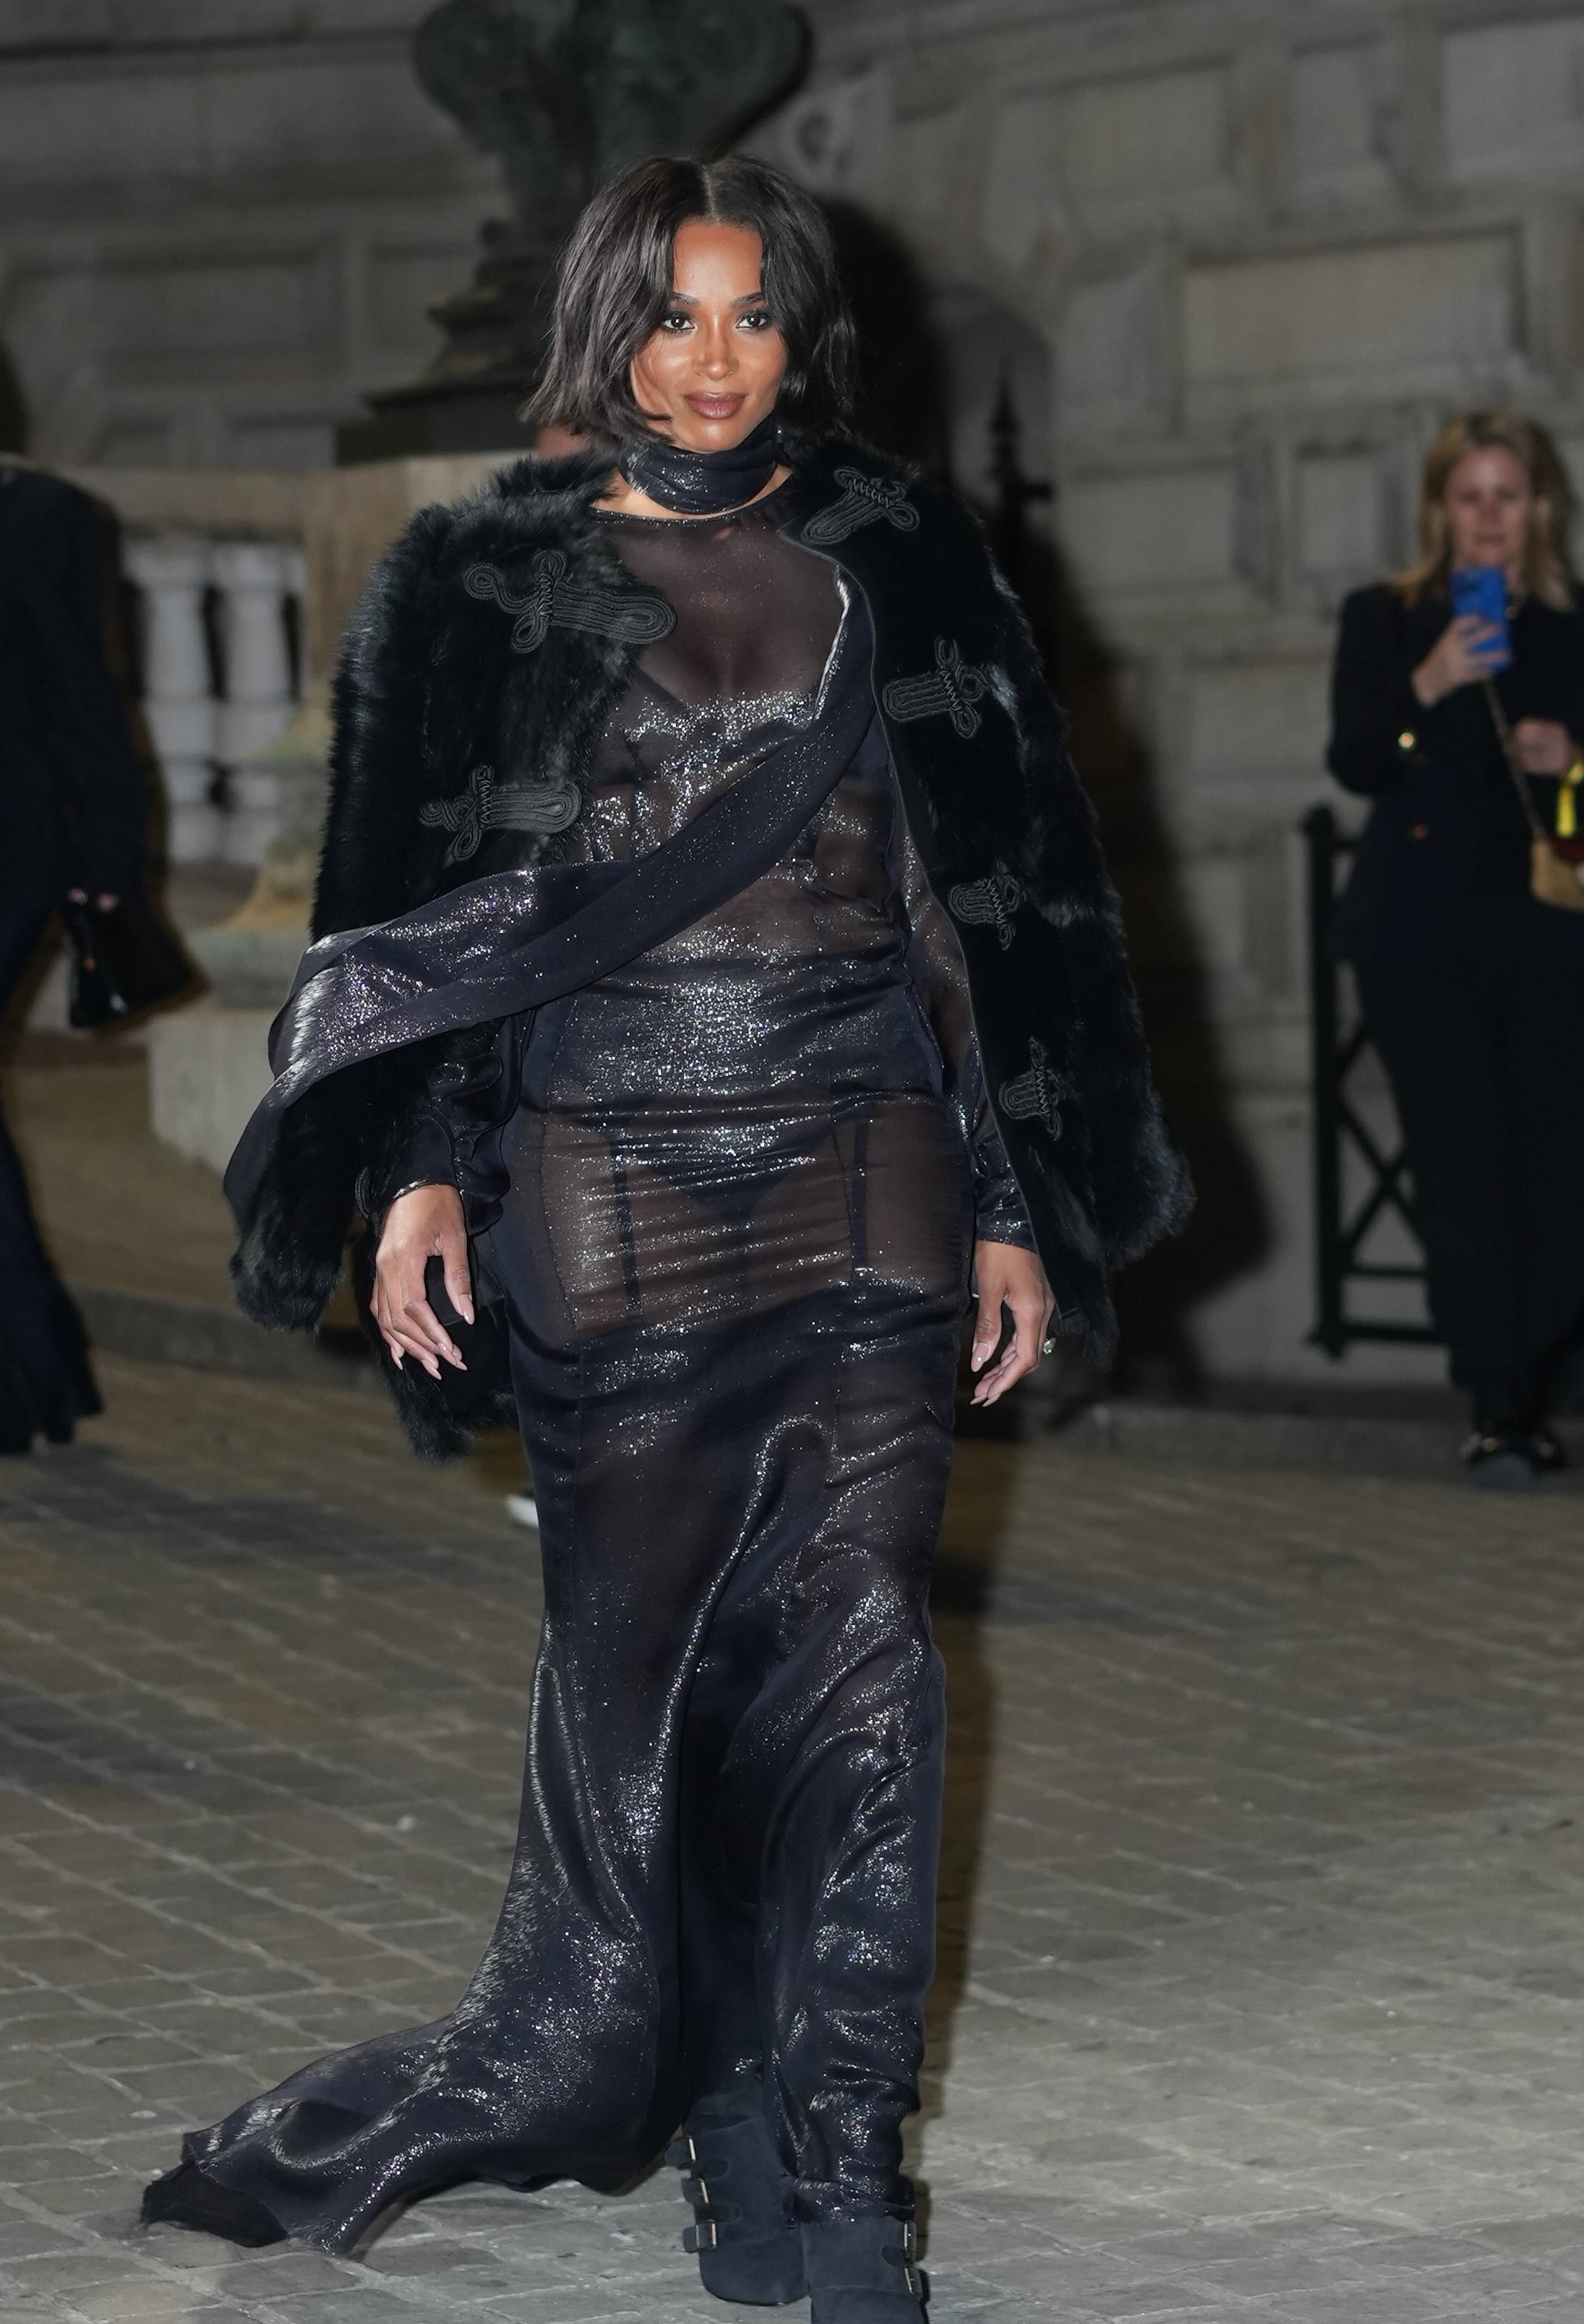 Ciara Stuns At Paris Fashion Week In These 5 Looks